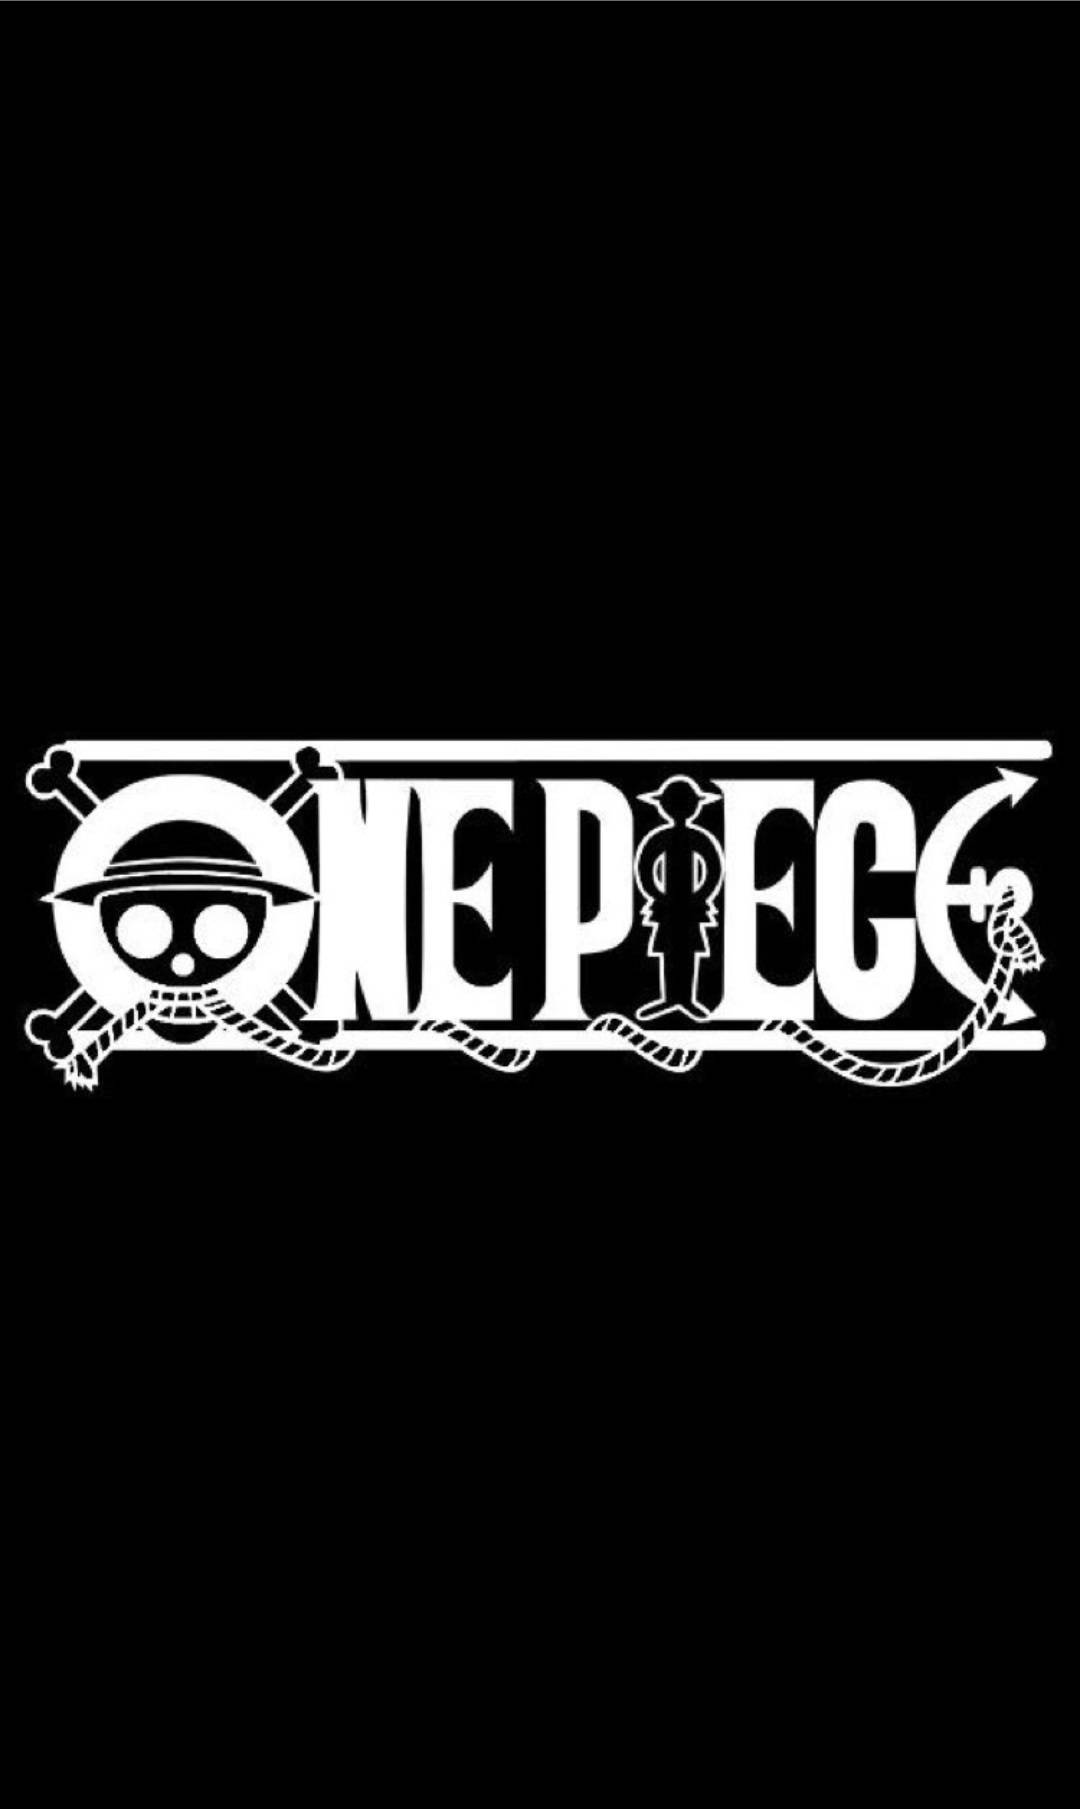 One Piece Phone Logo On Black Wallpaper